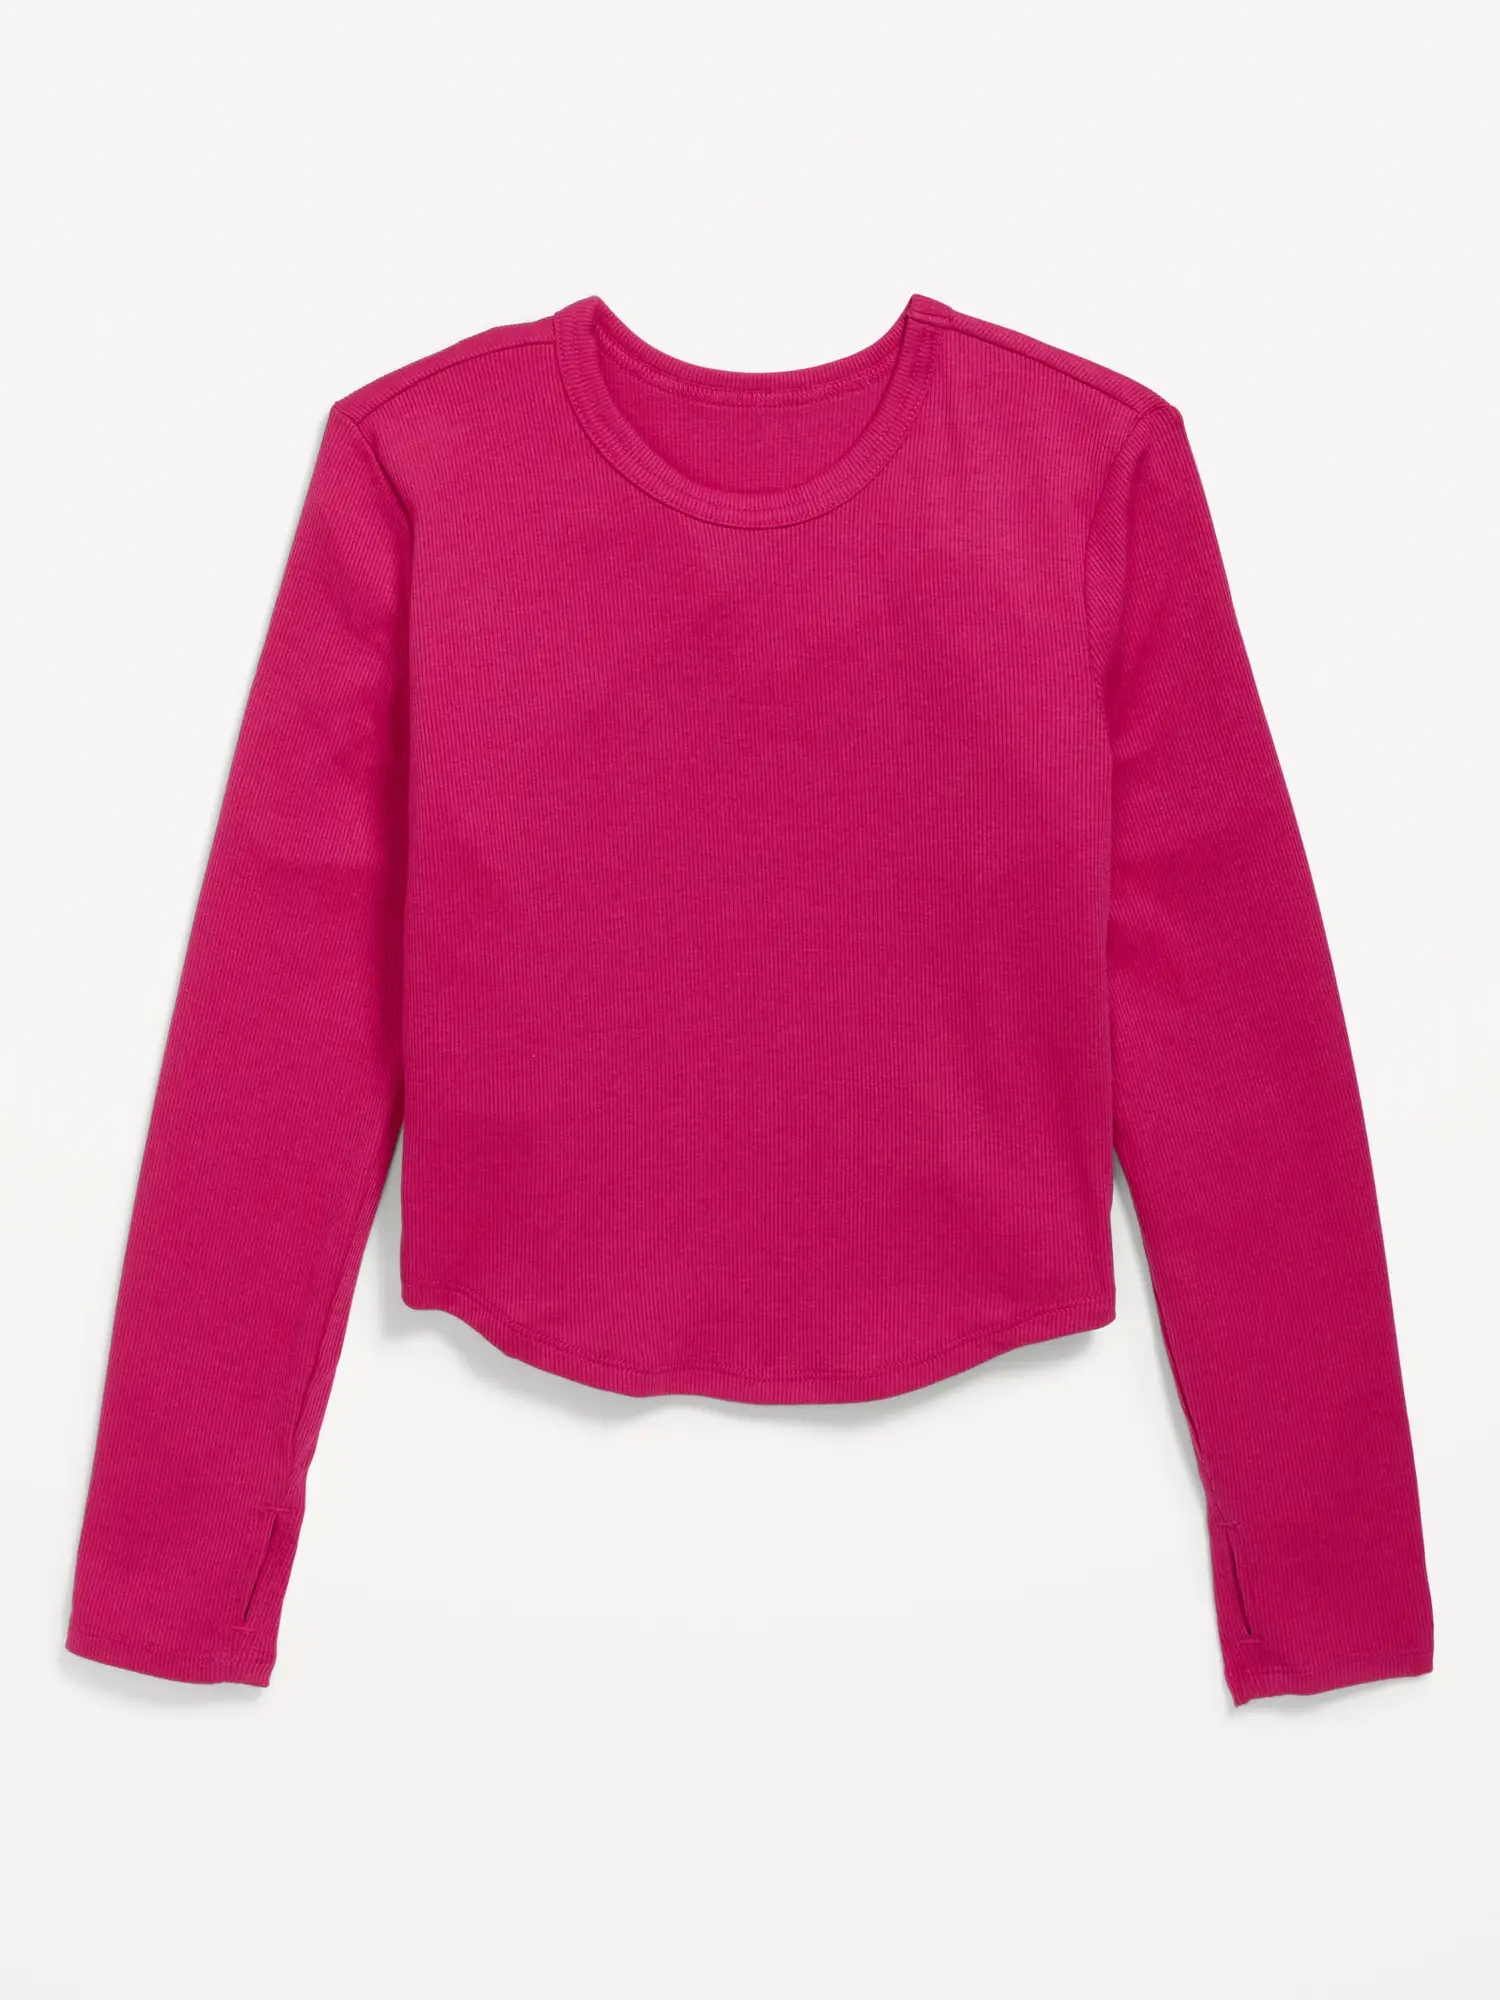 Old Navy UltraLite Long-Sleeve Rib-Knit T-Shirt for Girls pink. 1